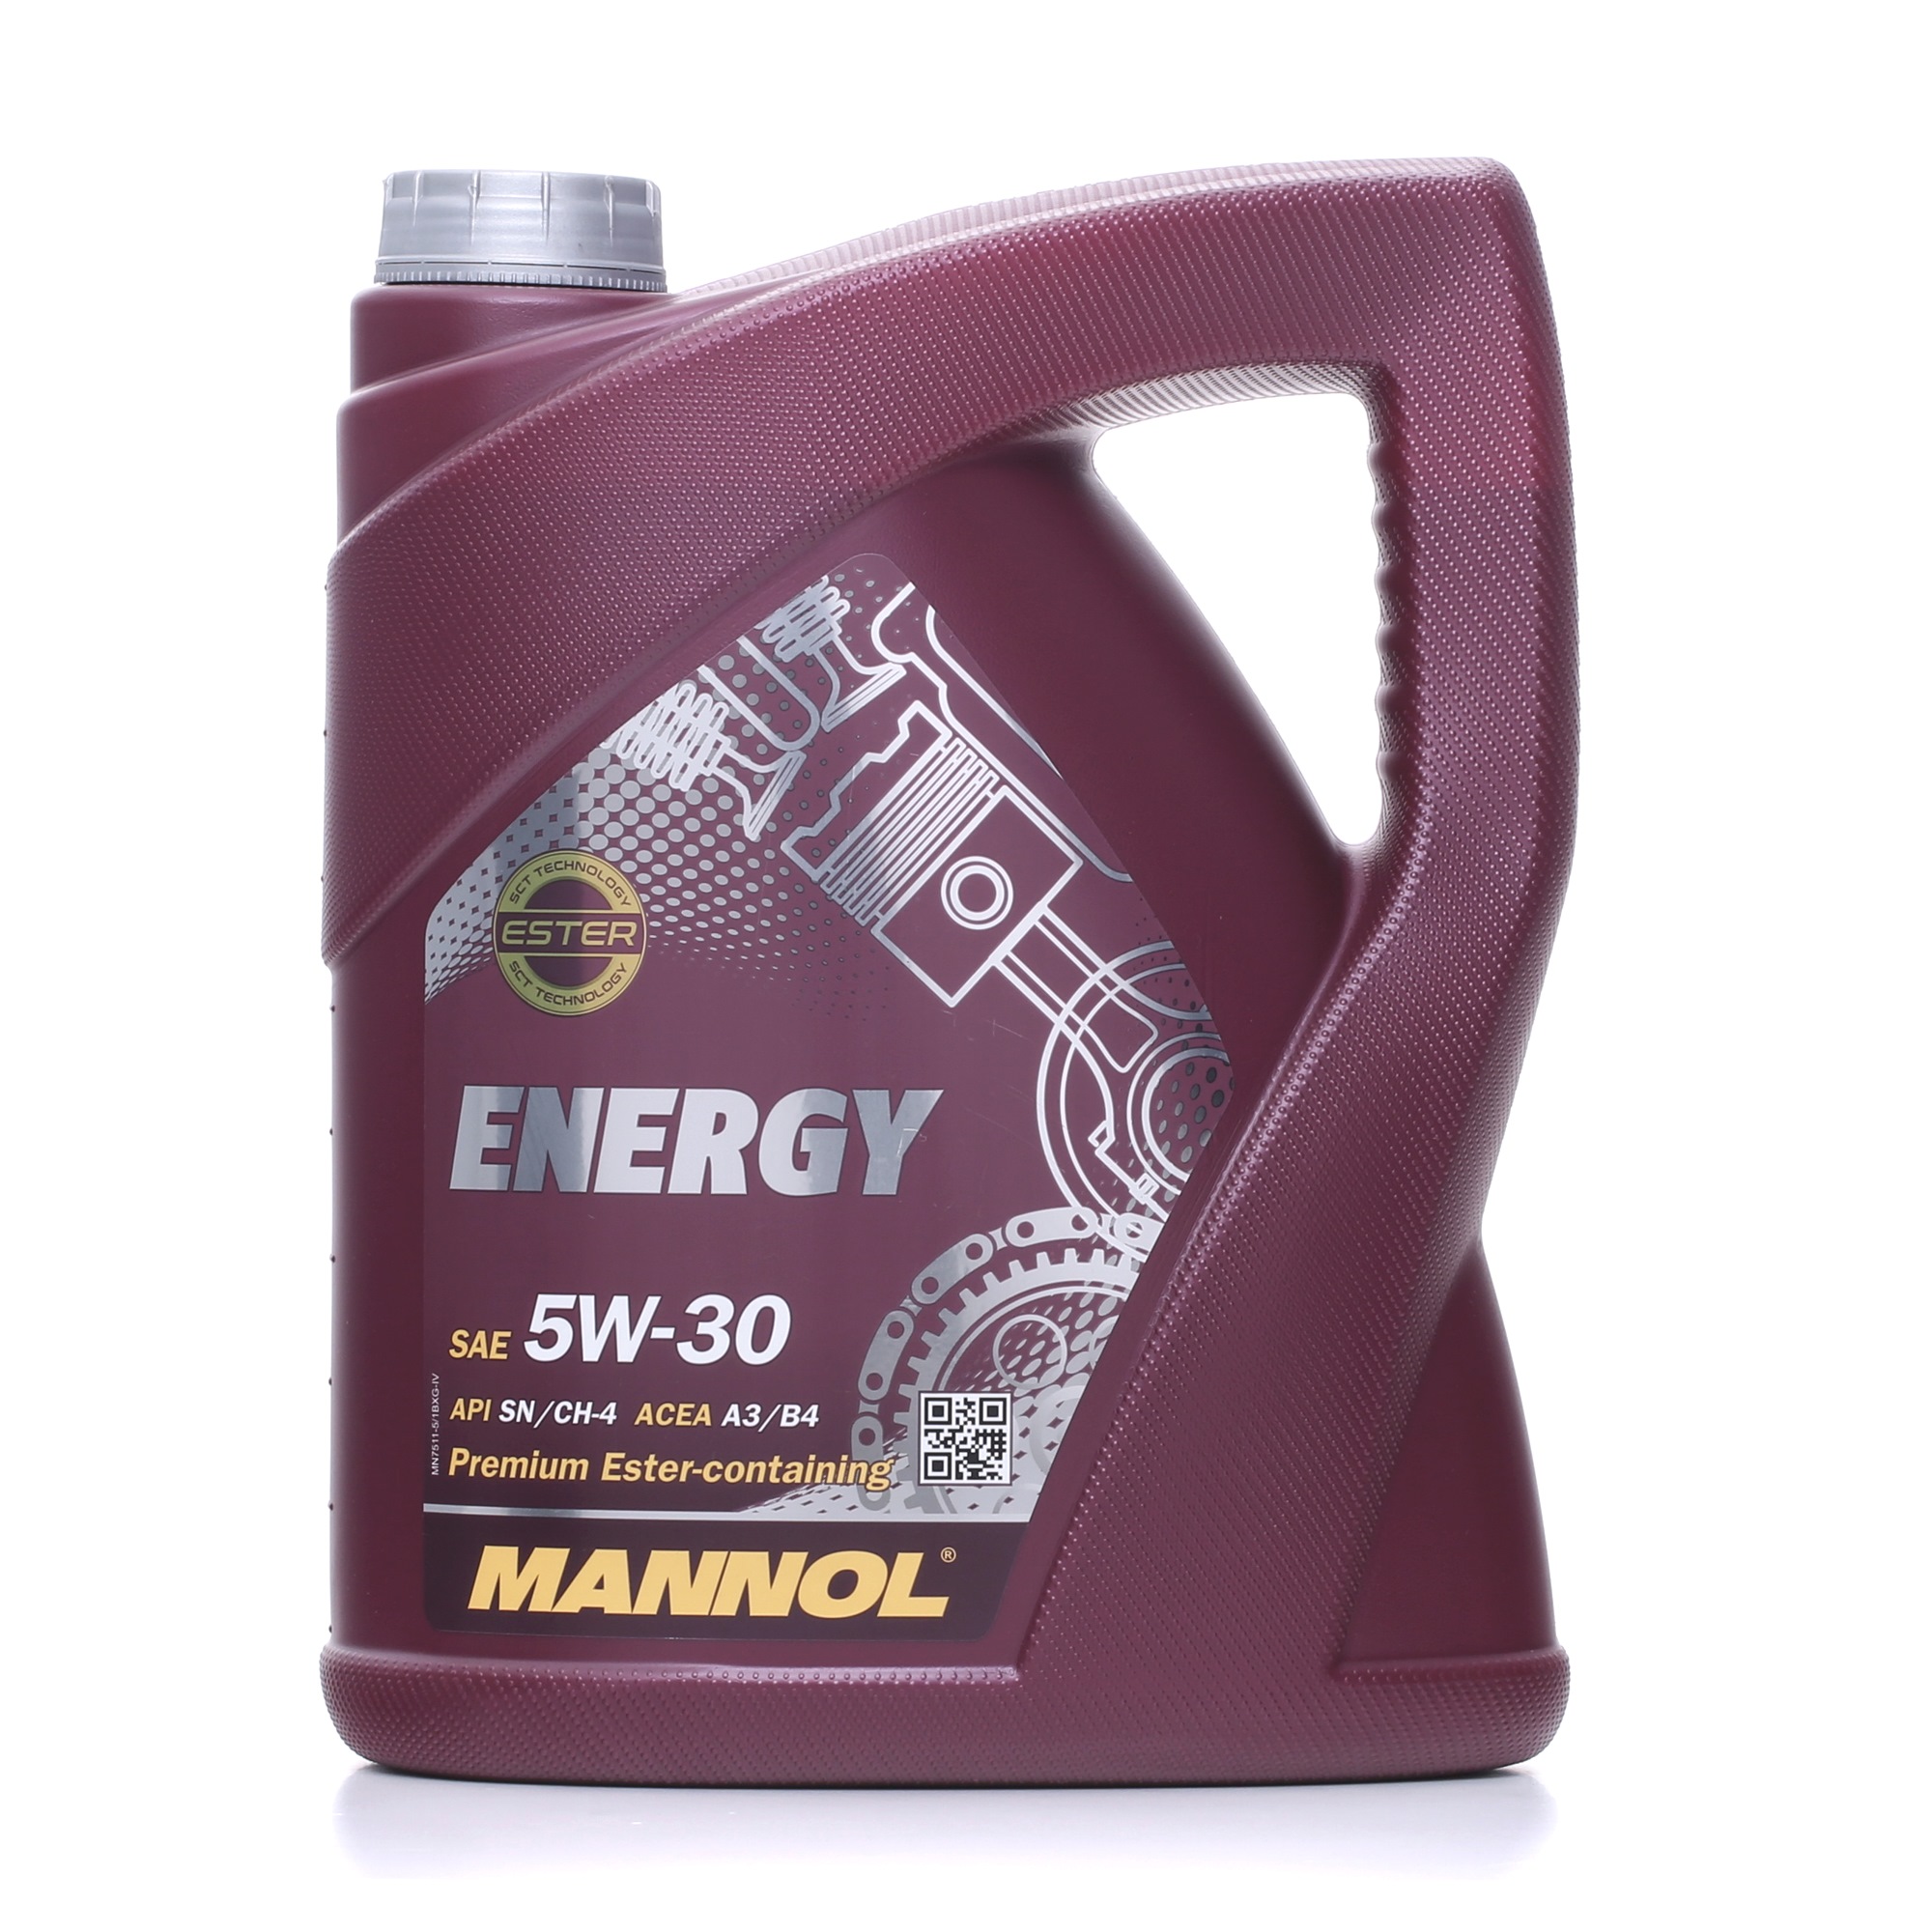 MN7511-5 MANNOL ENERGY 5W-30, 5L, Deels synthetische olie Motorolie MN7511-5 koop goedkoop